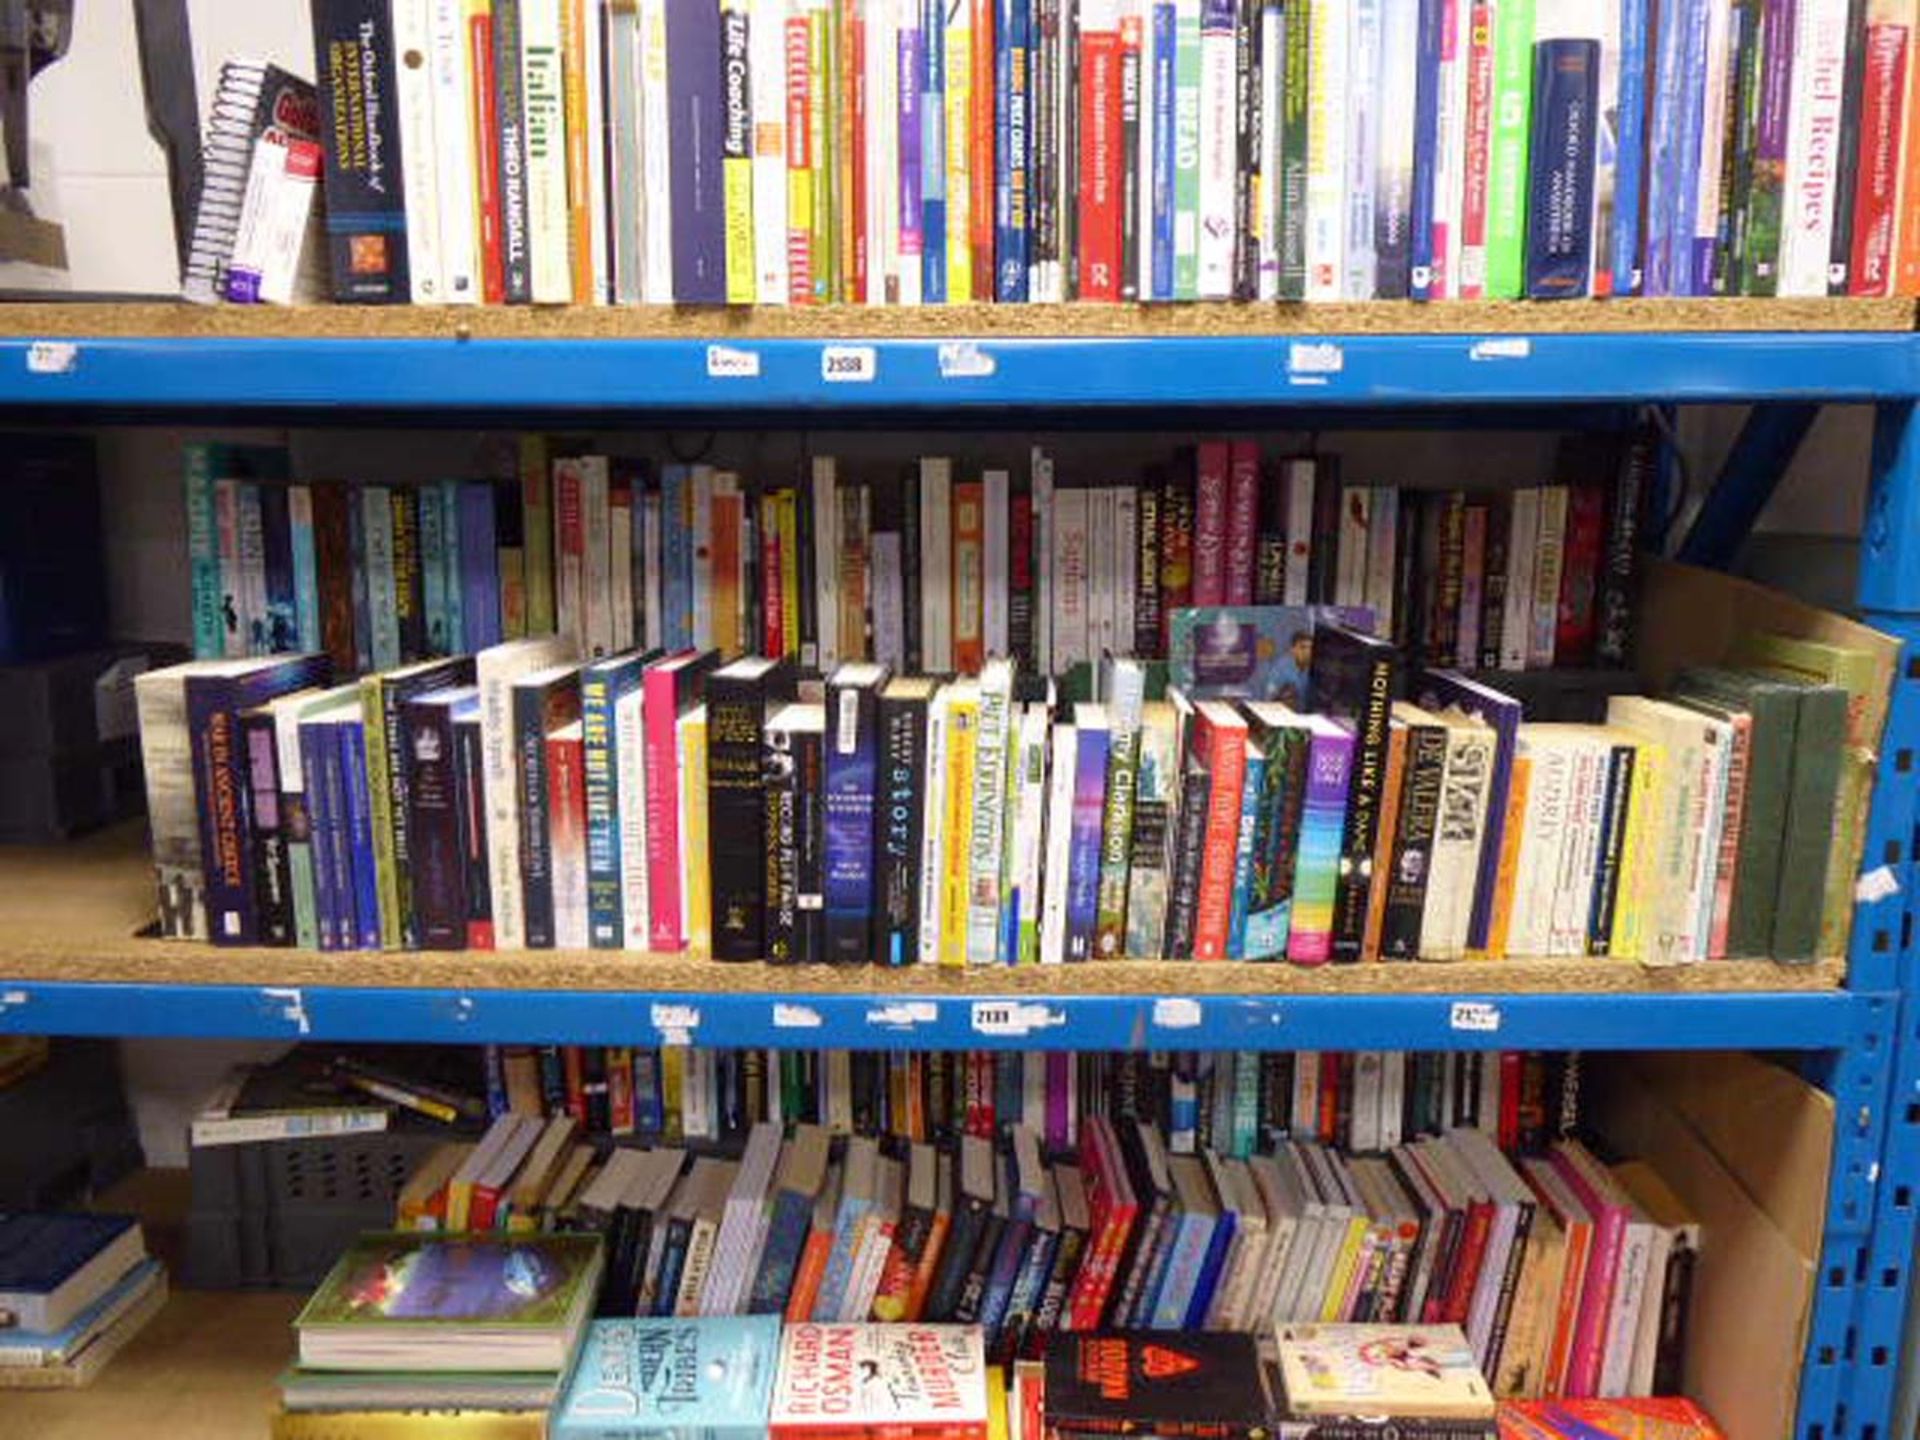 Shelf of fiction books